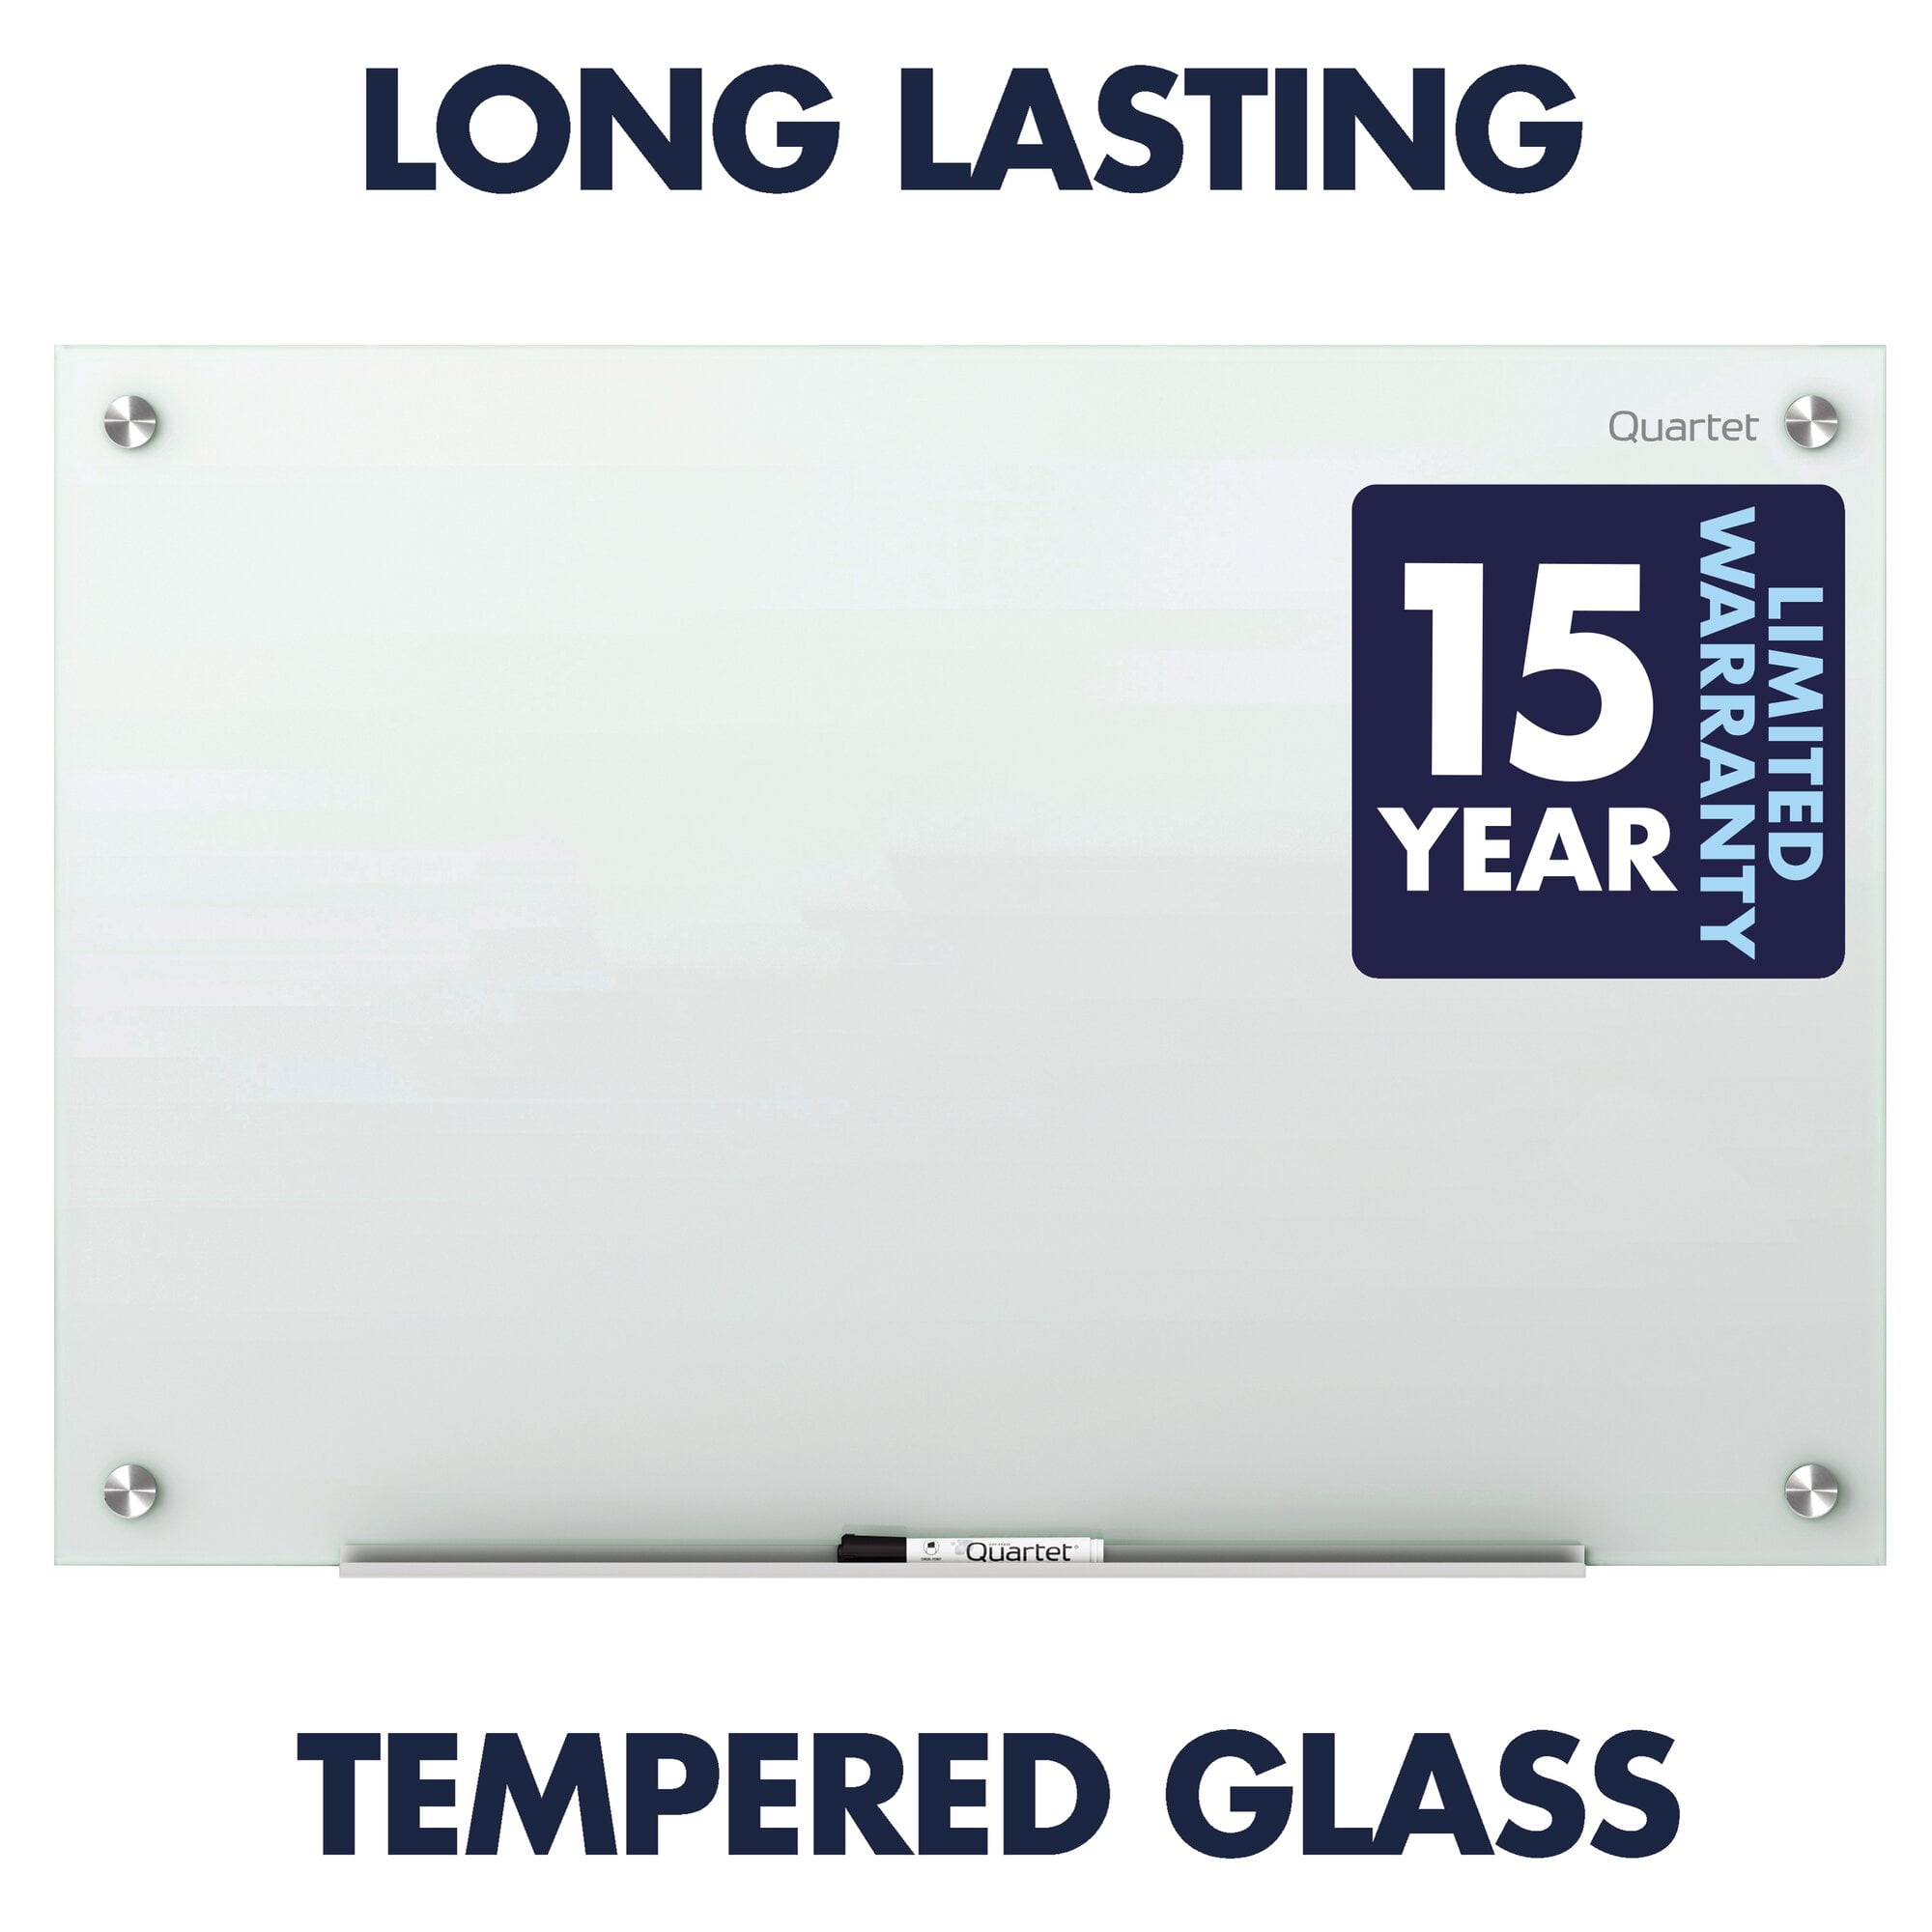 Quartet Magnetic Glass Dry Erase Board – MSU Surplus Store